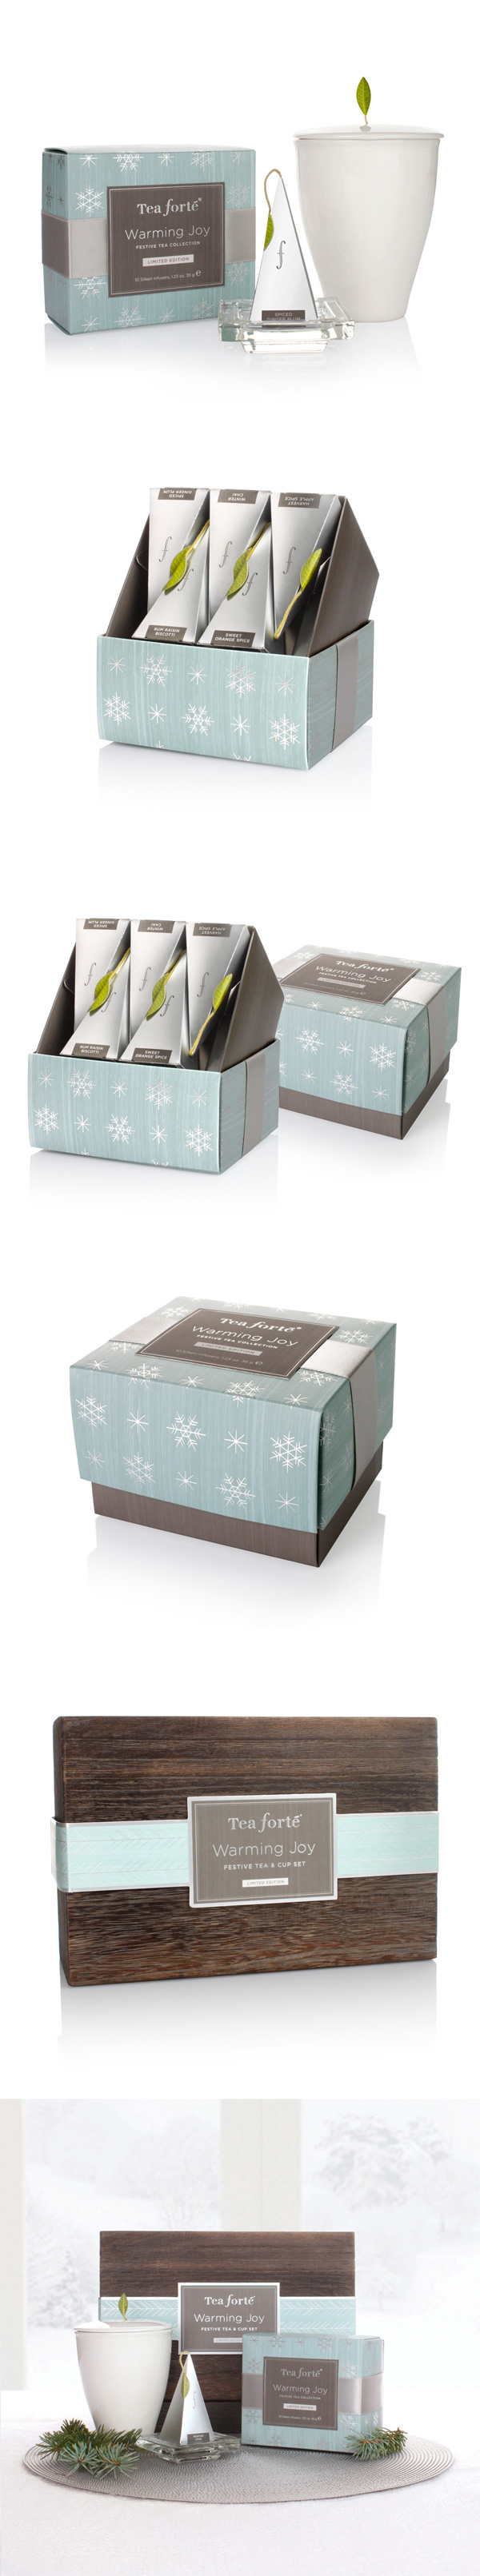 Tea Forte 冬季戀曲 茶具茶品禮盒 Warming Joy Gift Set